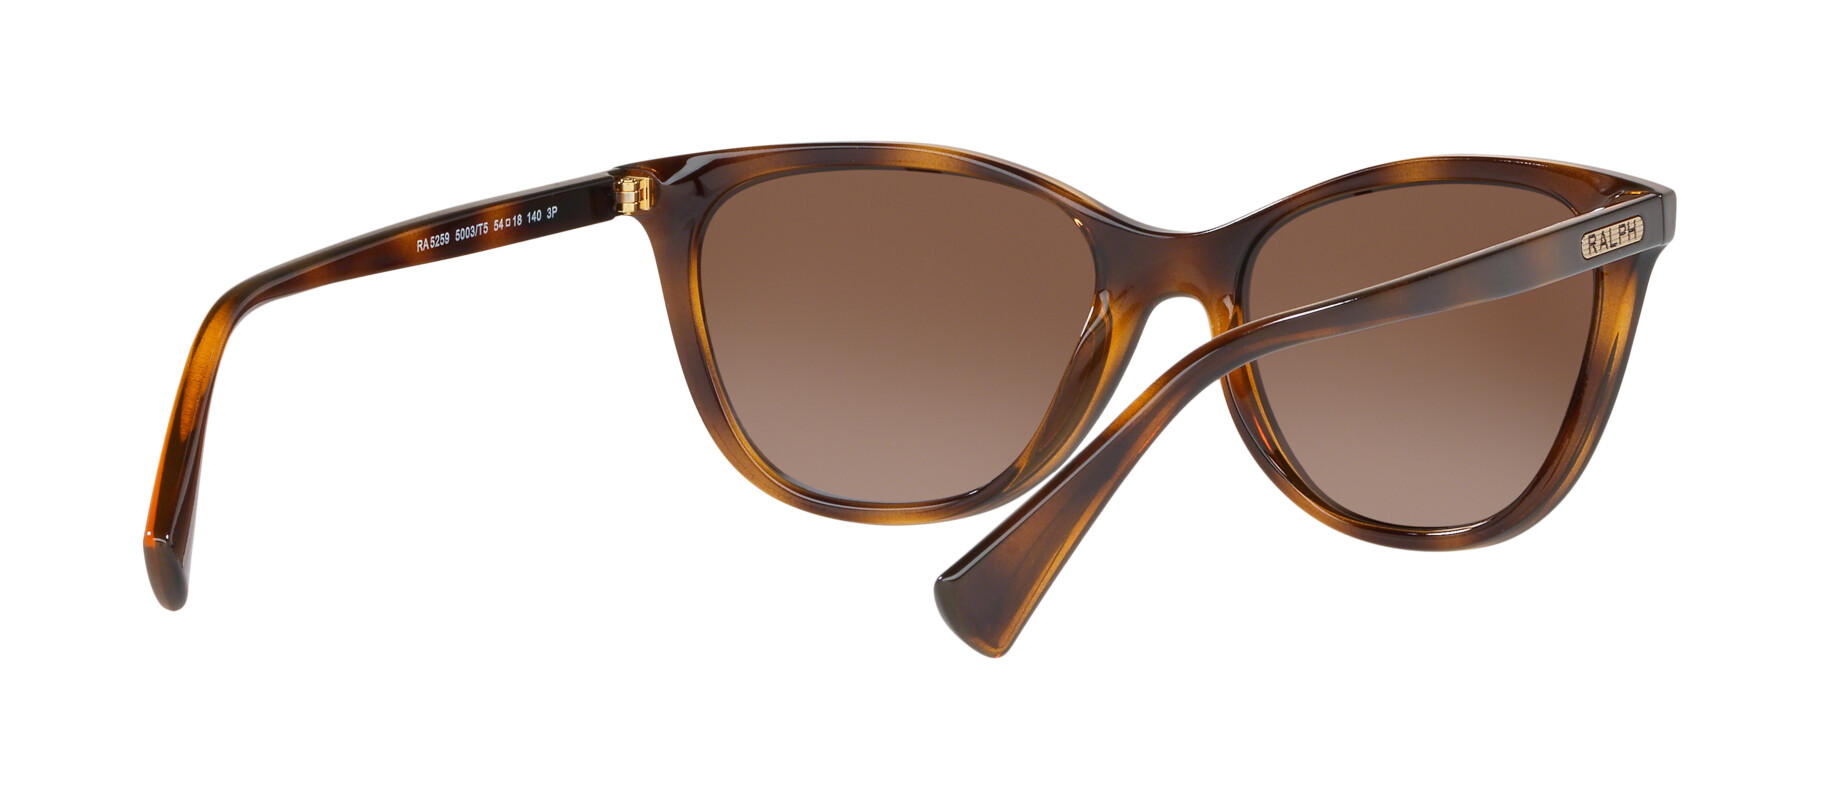 [products.image.promotional01] Ralph Lauren 0RA5259 5003T5 Sonnenbrille